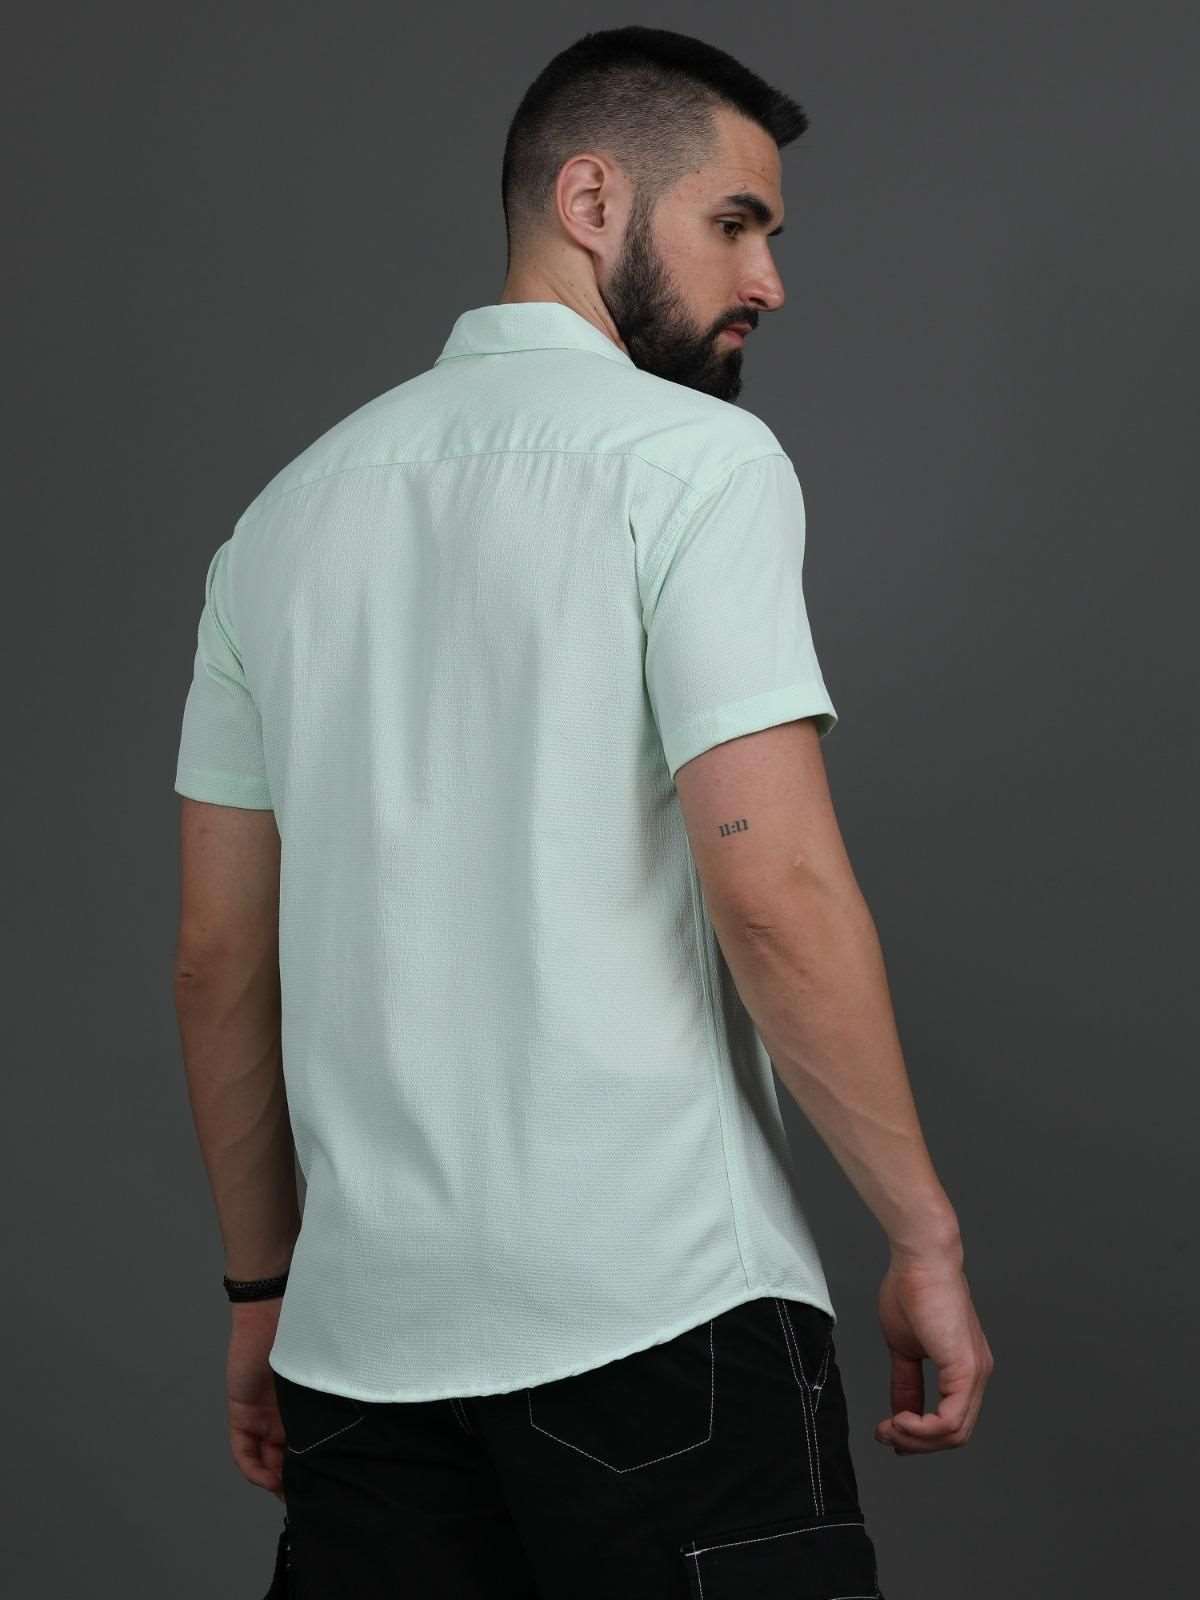 Men's Polycotton (Popcorn Fabric ) Solid Half Sleeves Casual Shirt